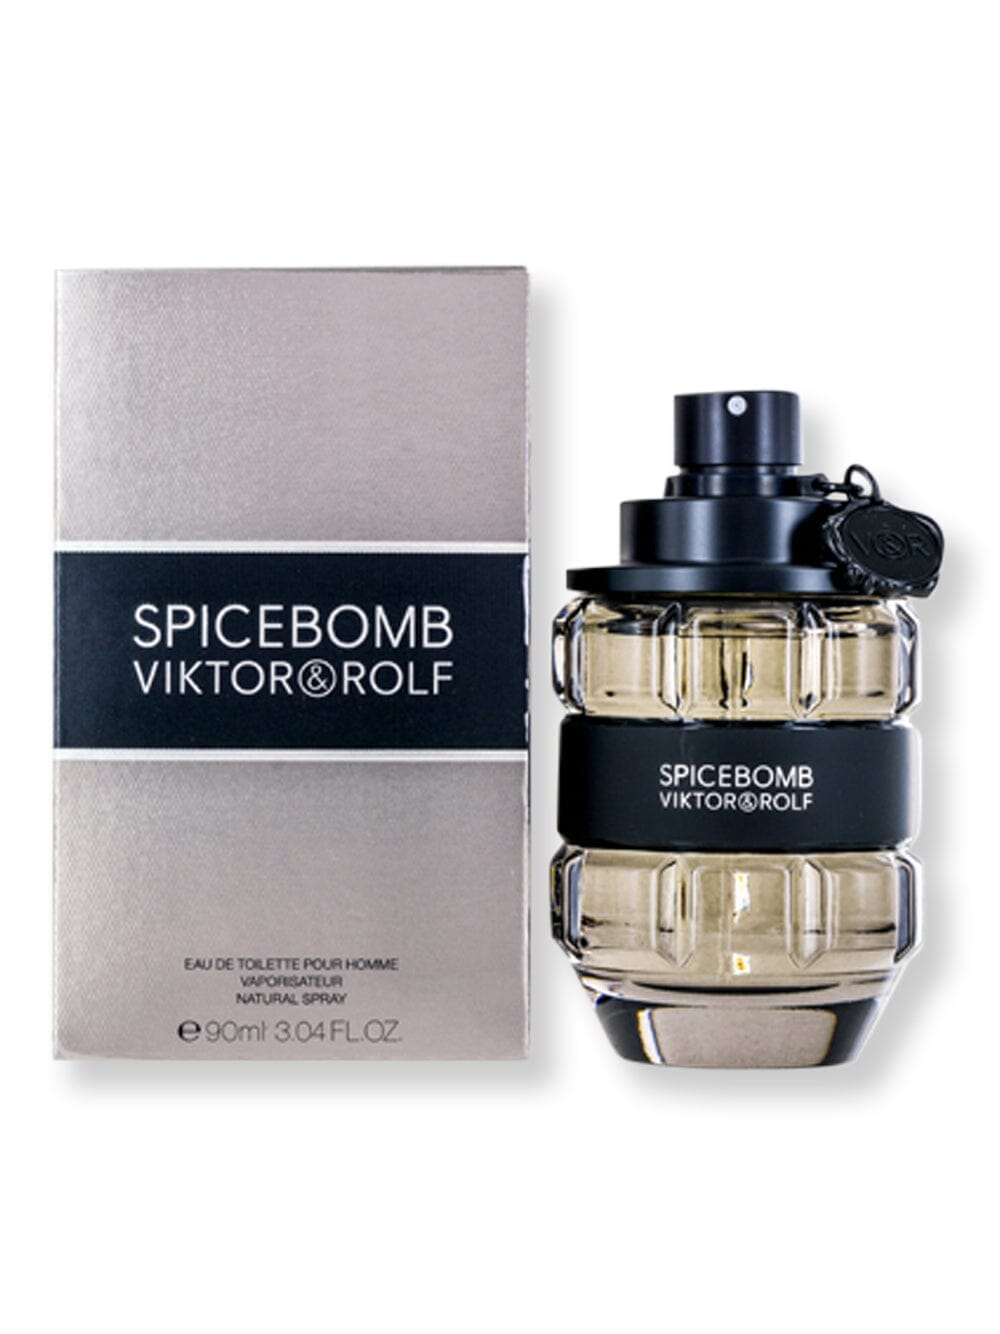 Viktor&Rolf Viktor&Rolf Spicebomb EDT Spray 3 oz Perfume 